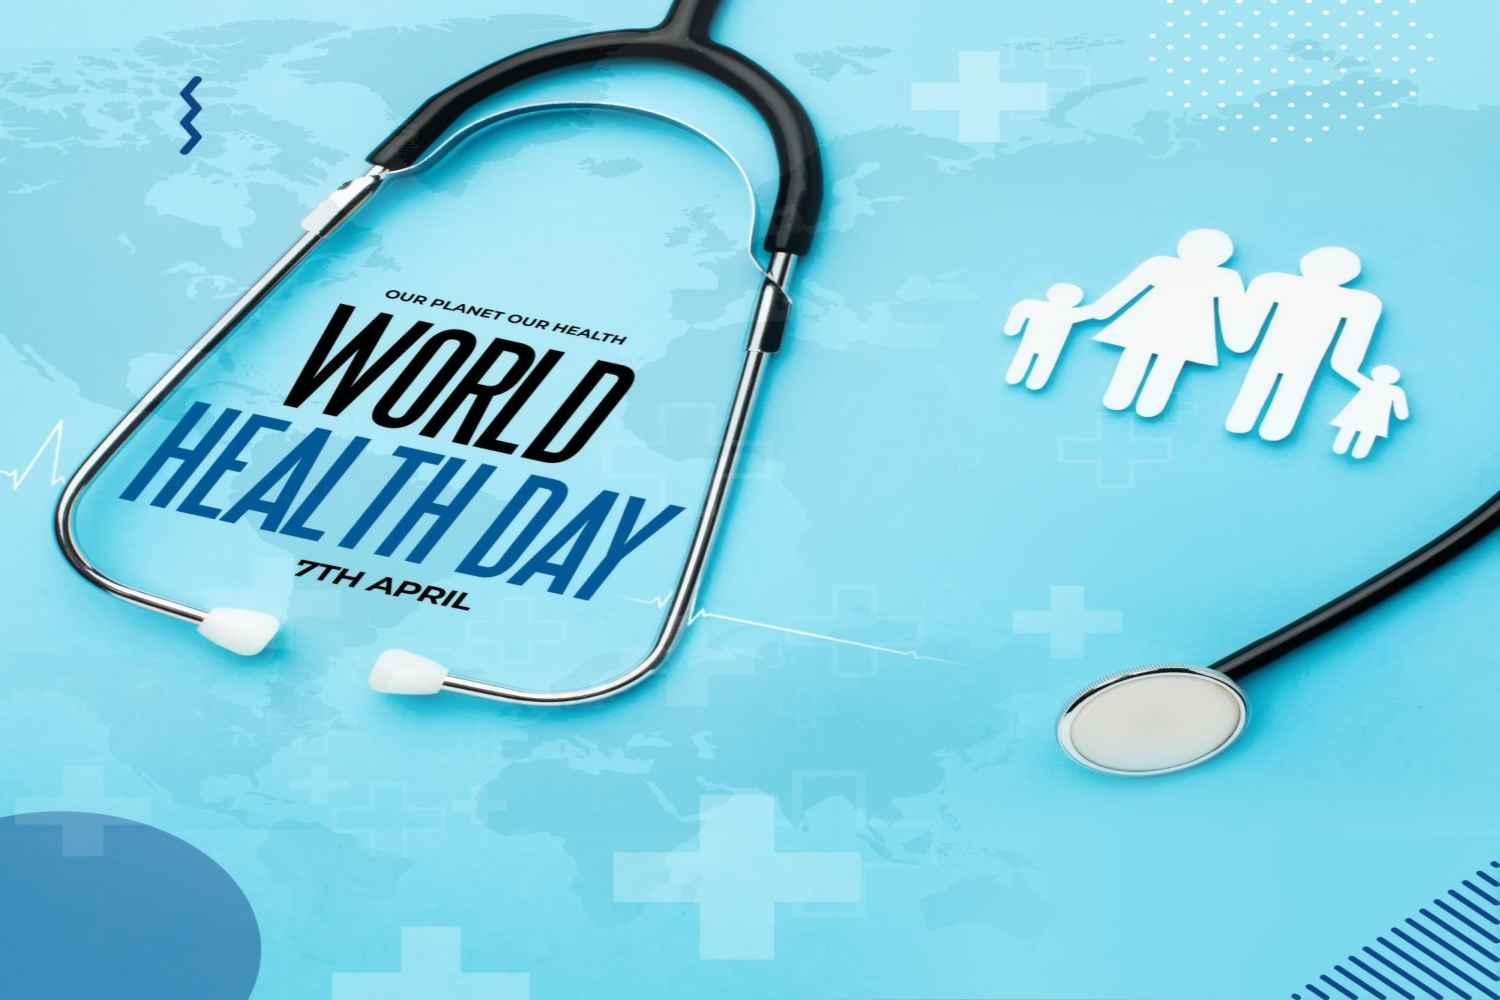 world health Day -April 7th